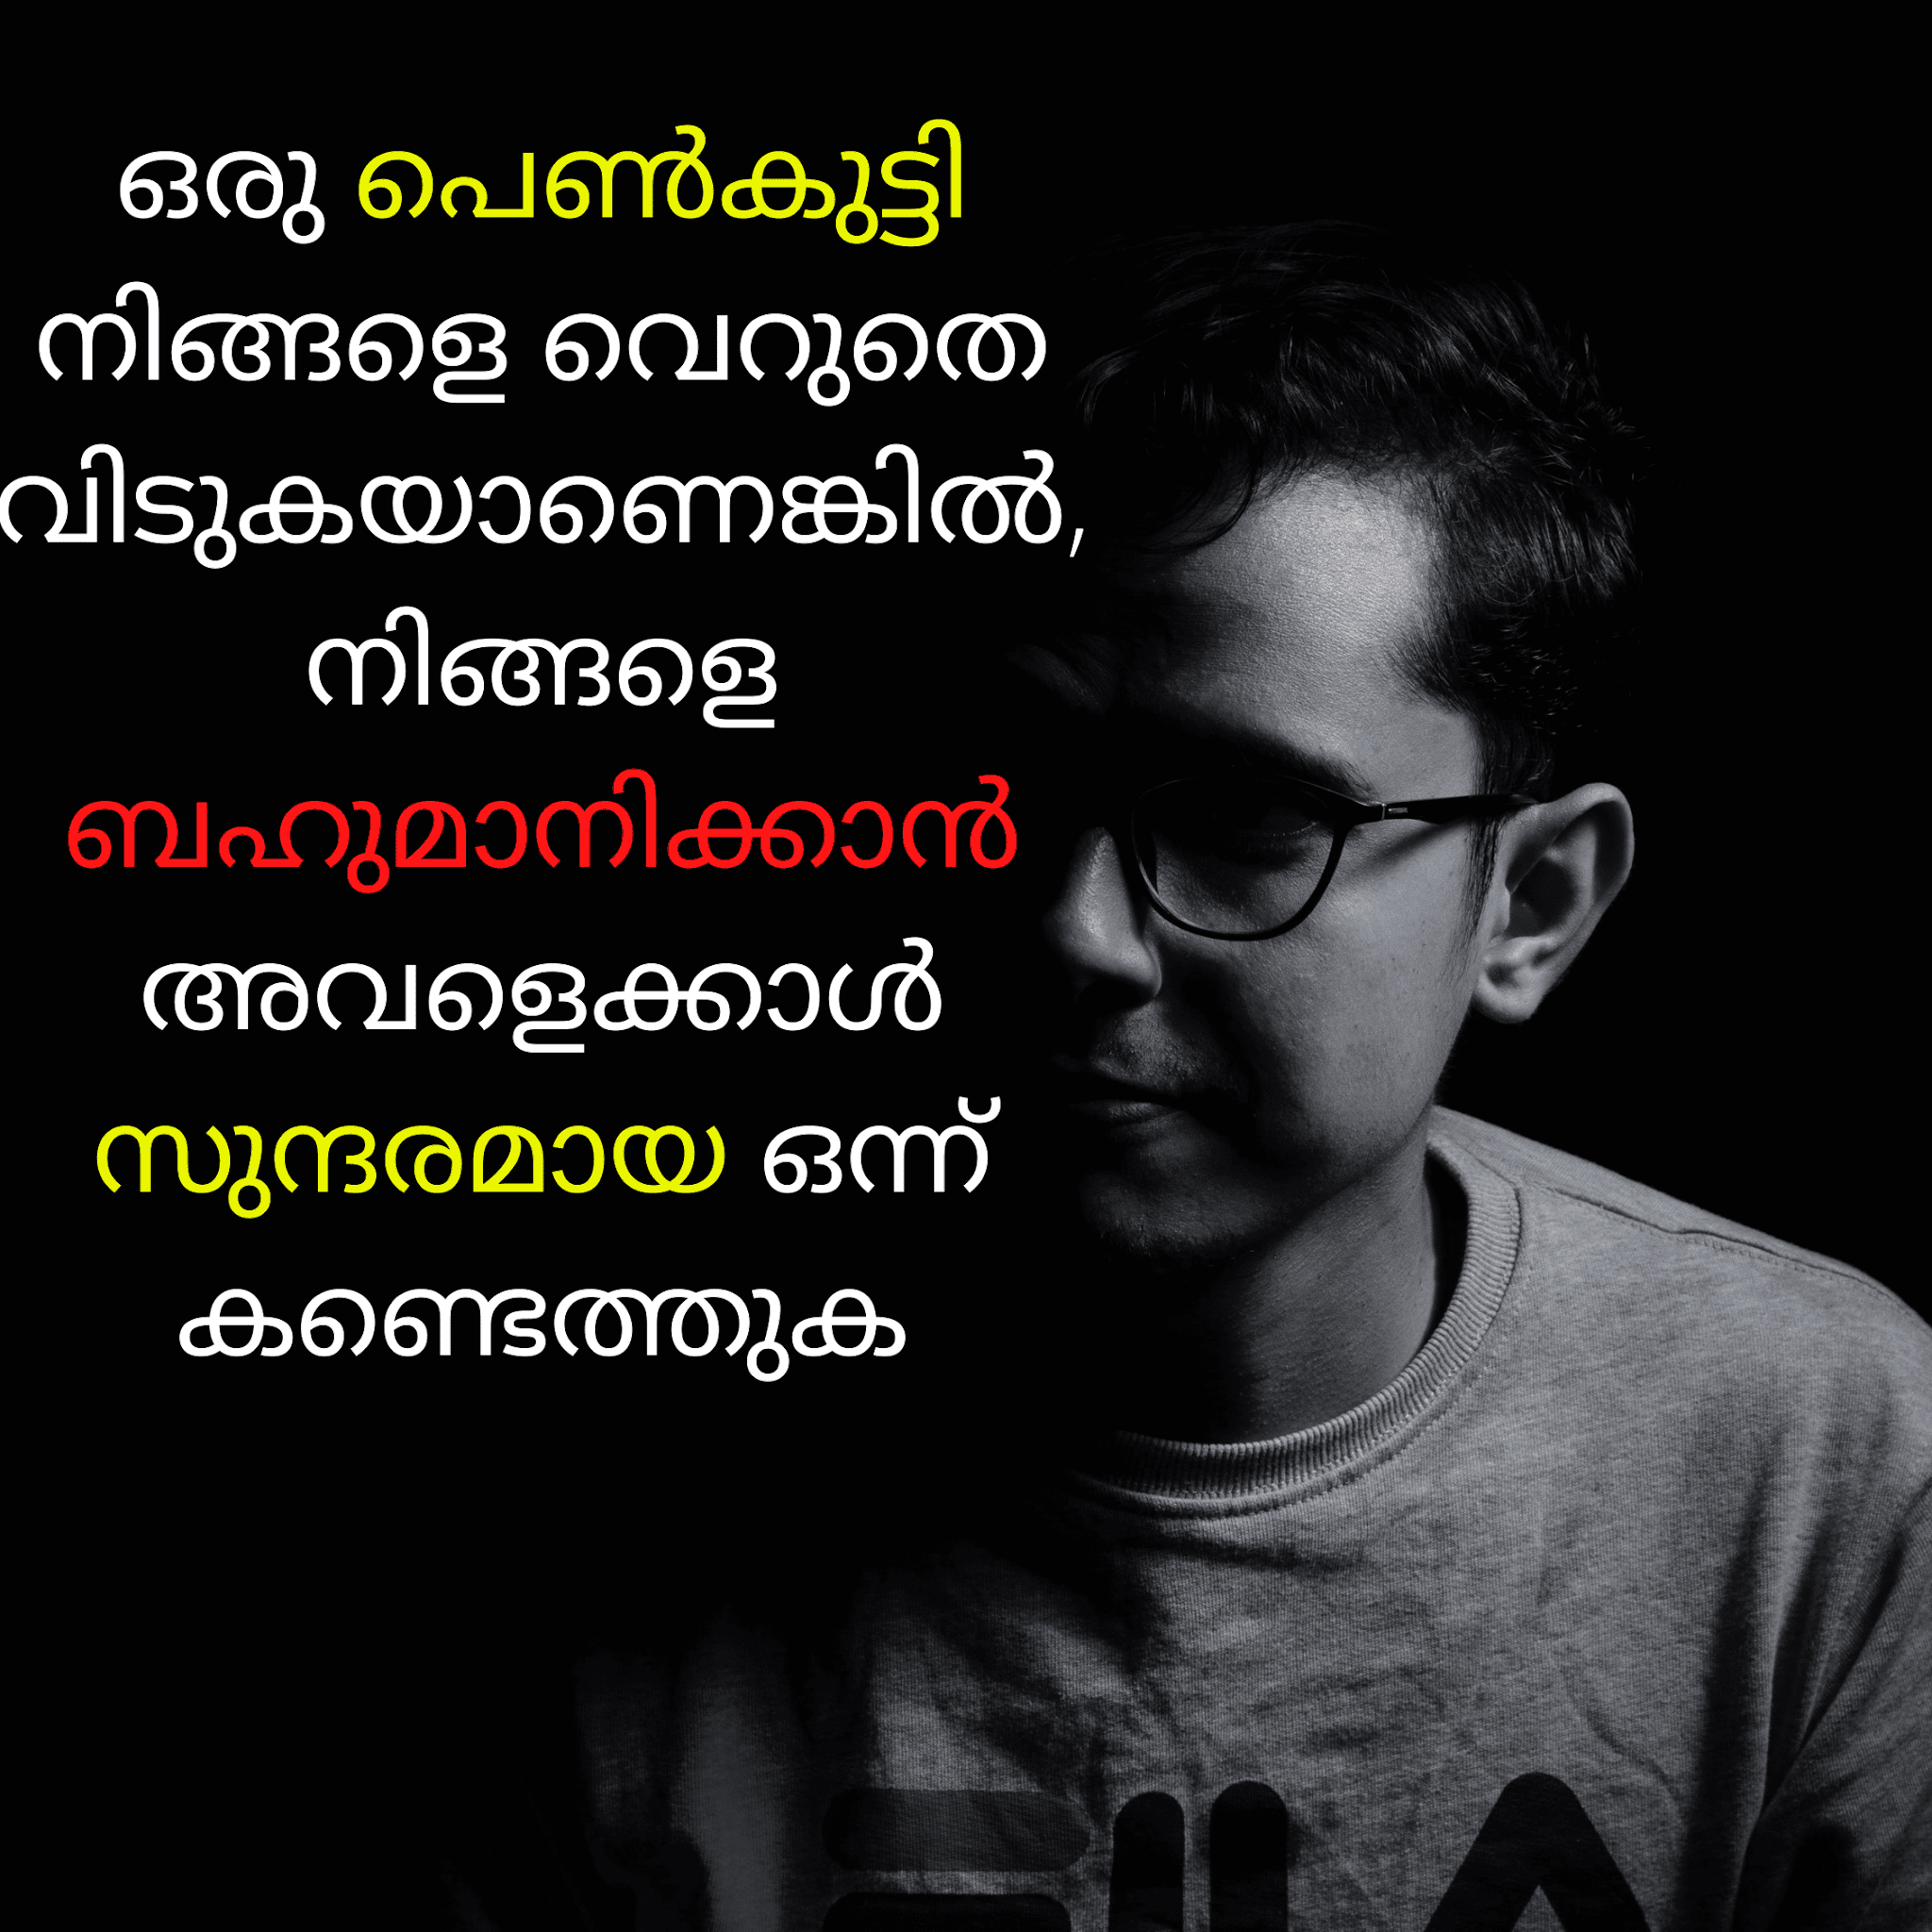 Campus quotes malayalam